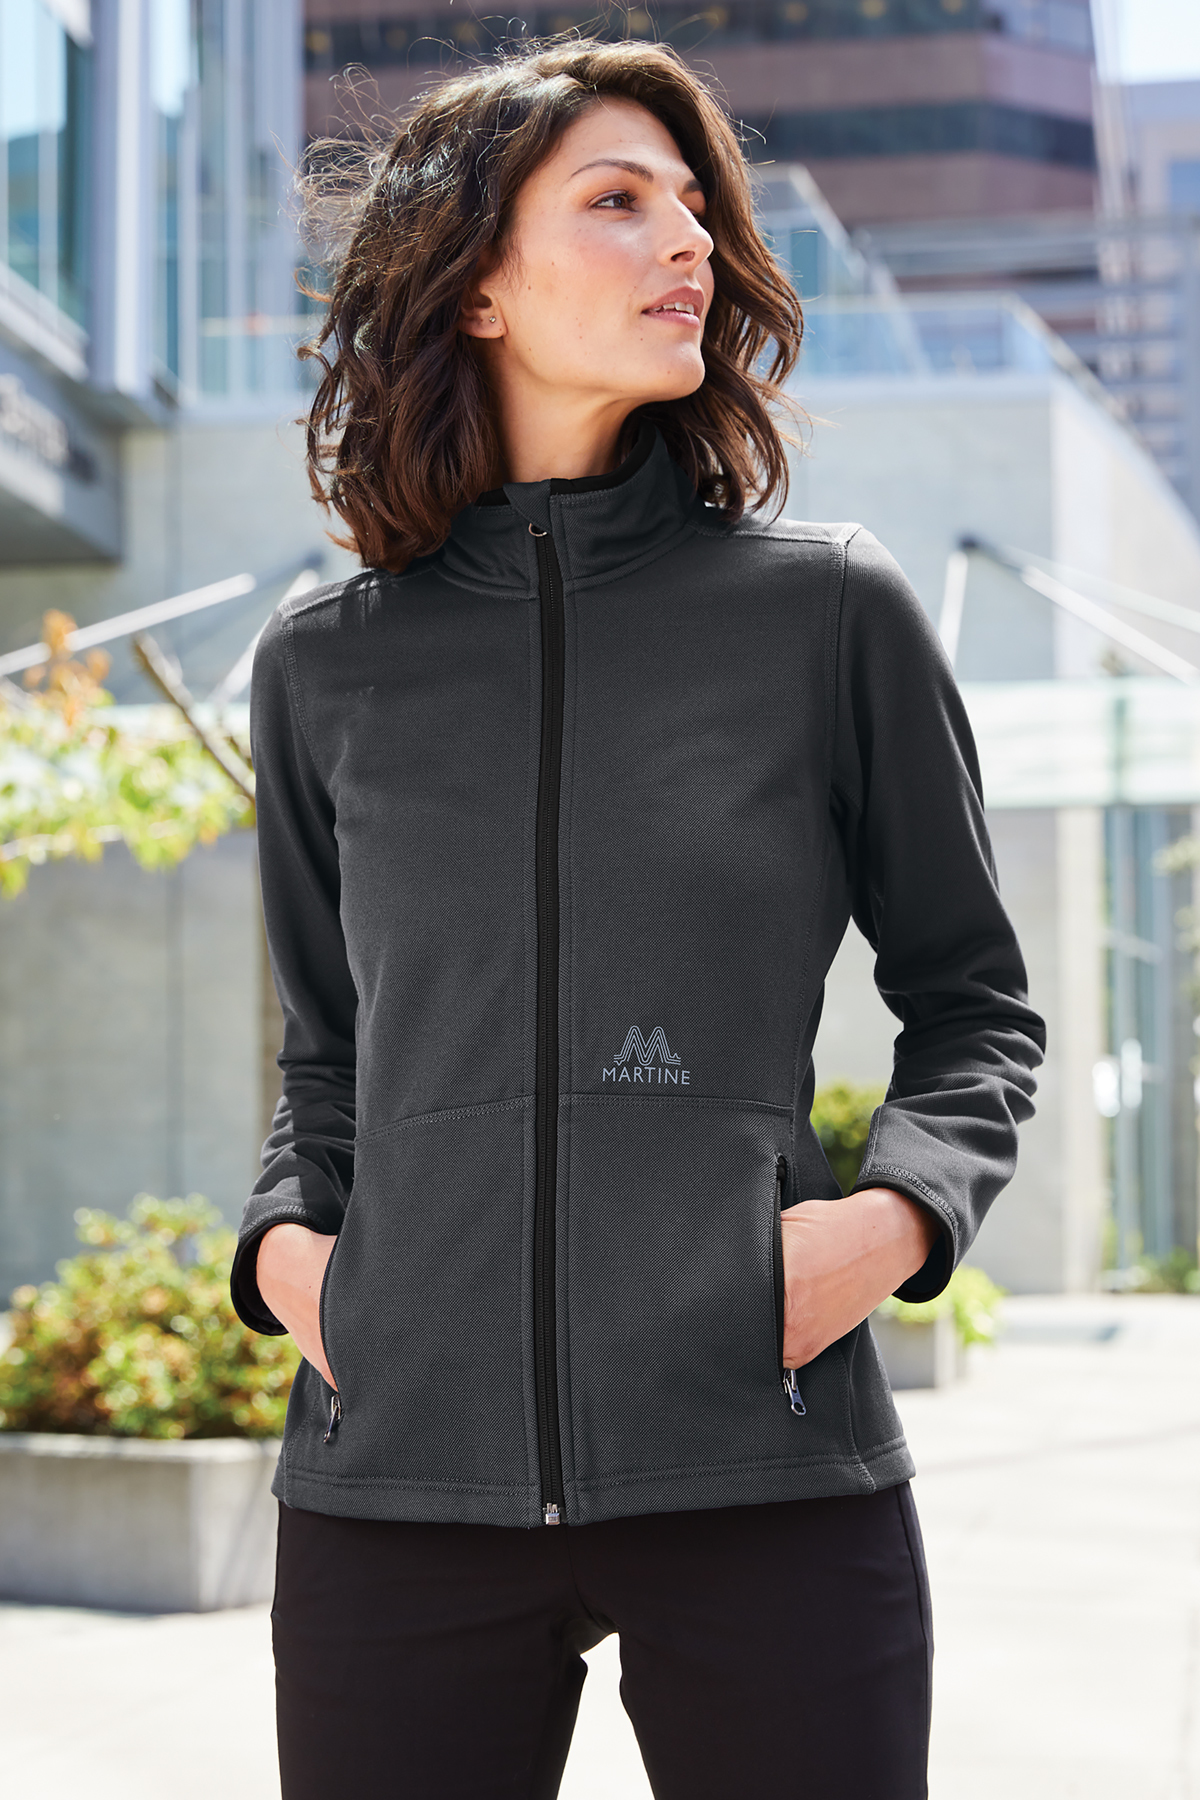 Port Authority Ladies Network Fleece Jacket, Product